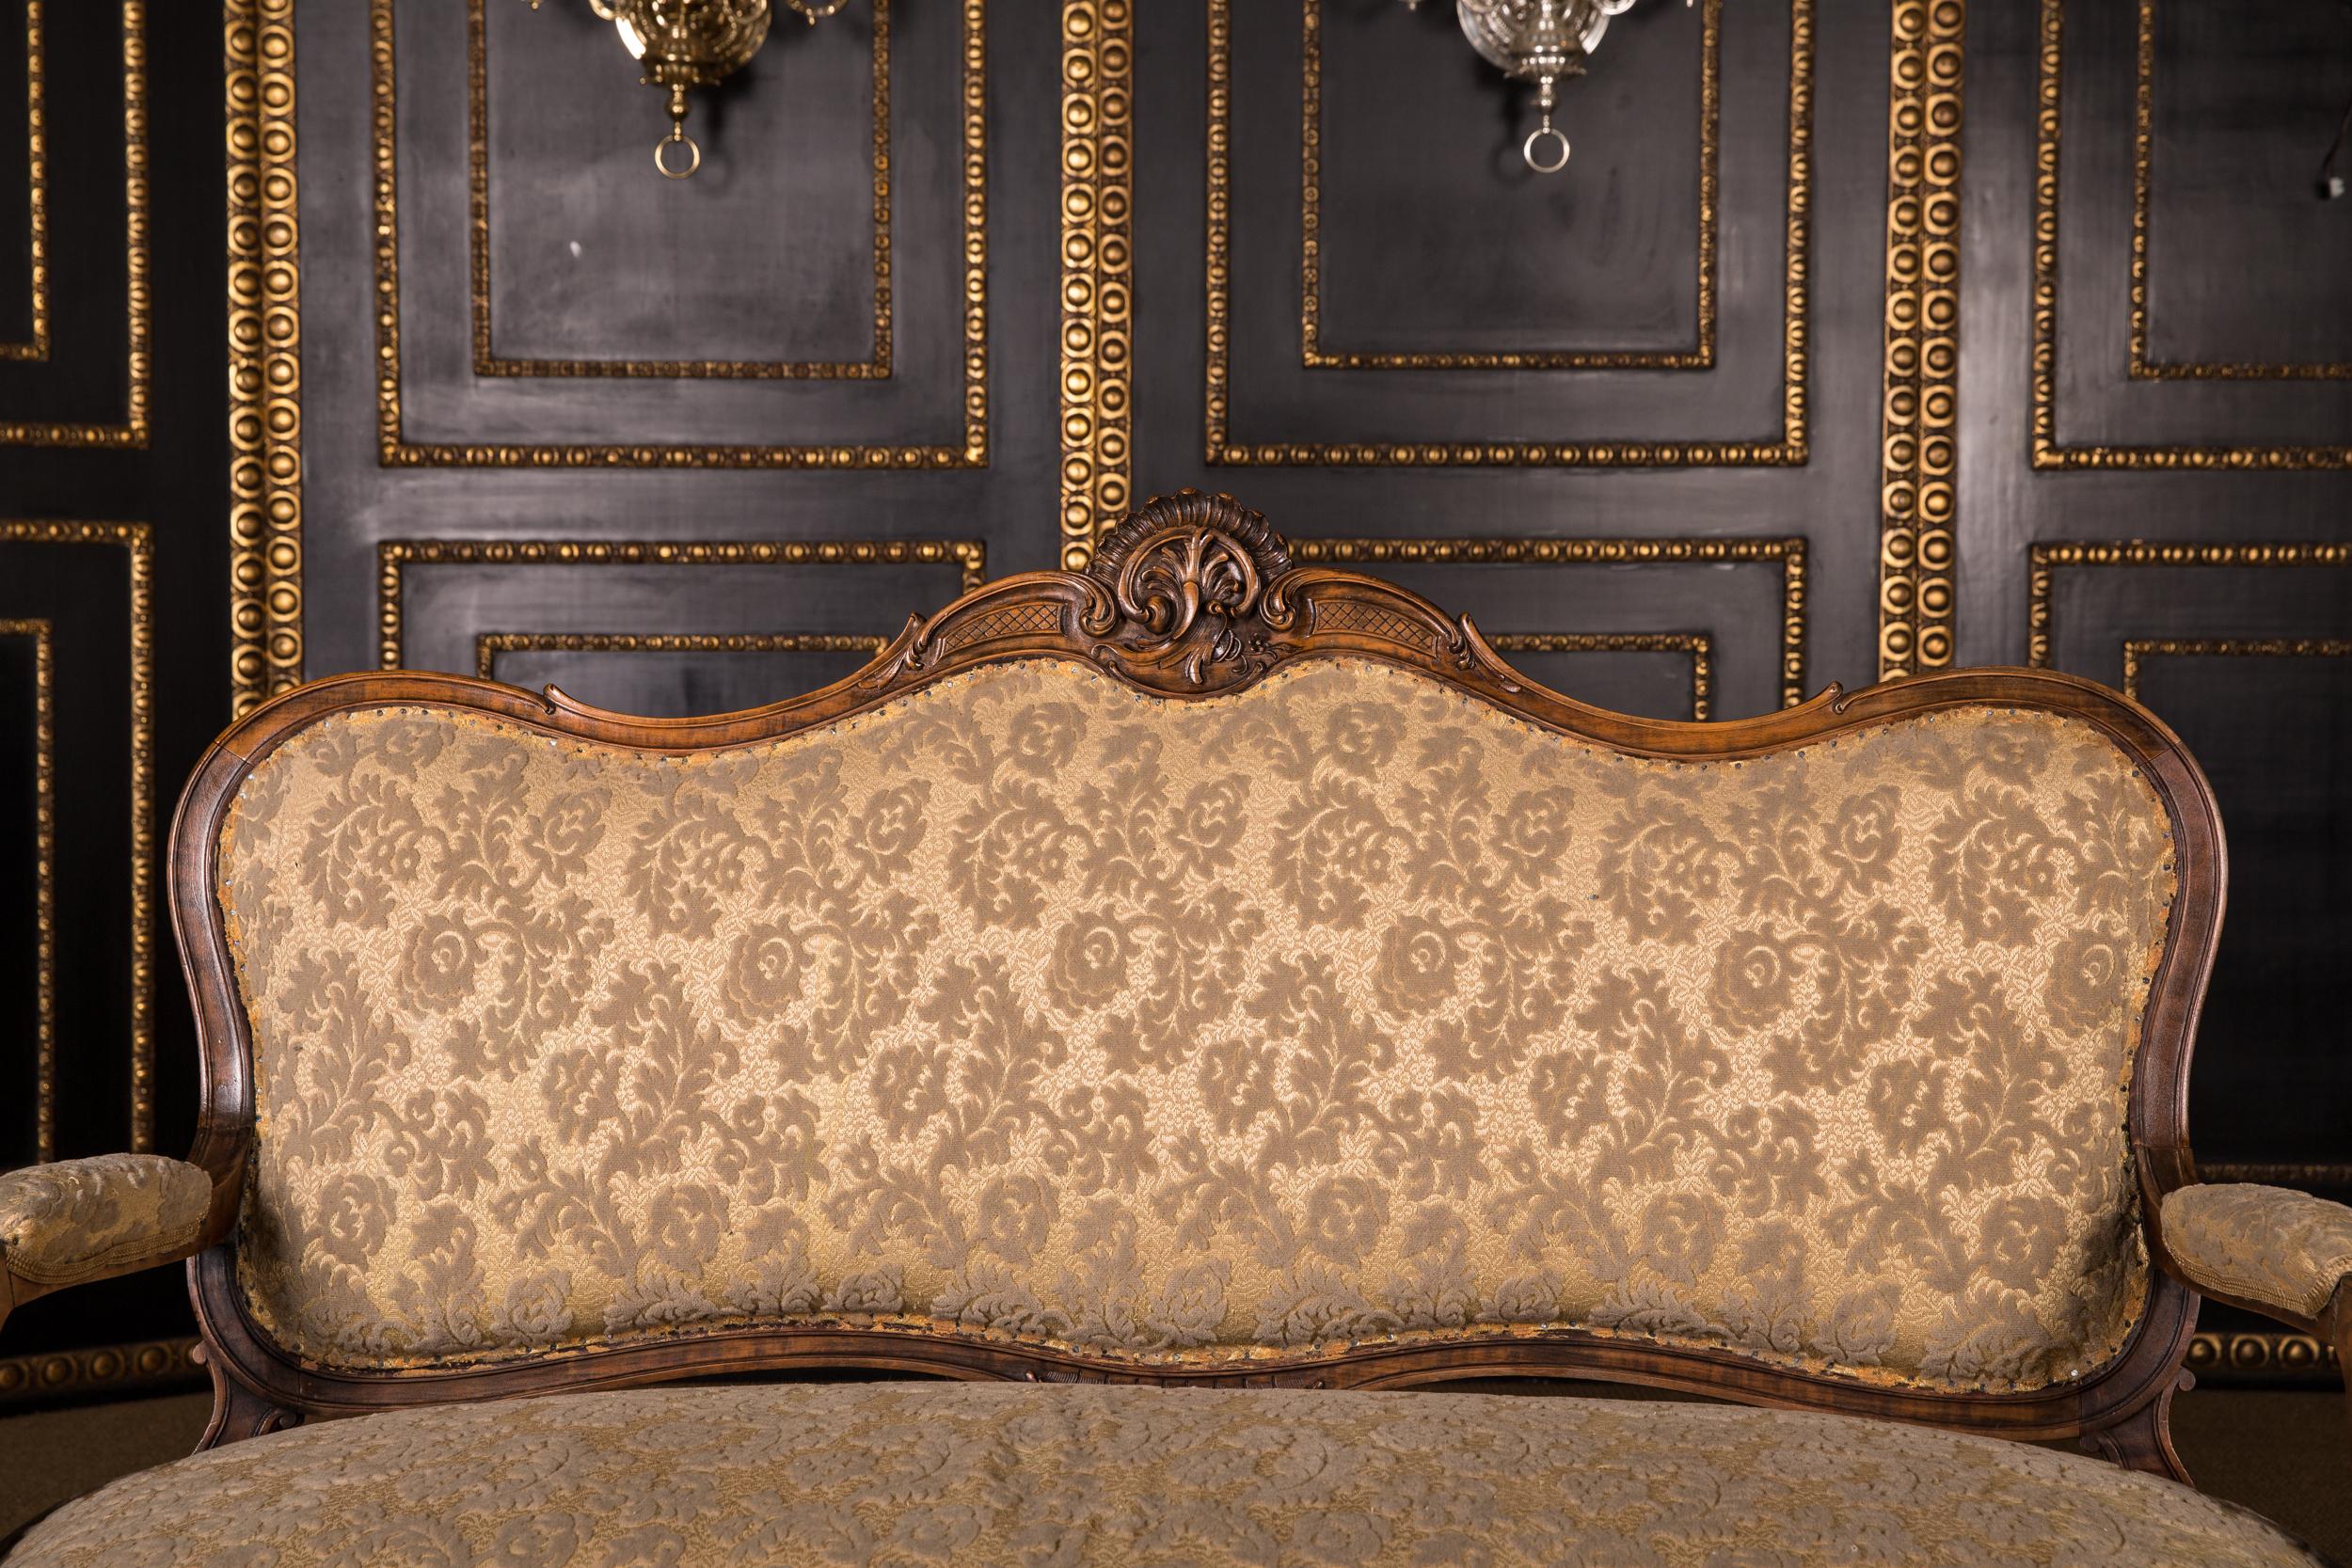 Castle Worthy Salon Group Sofa and Chairs Neo Rococo, circa 1860 (19. Jahrhundert)